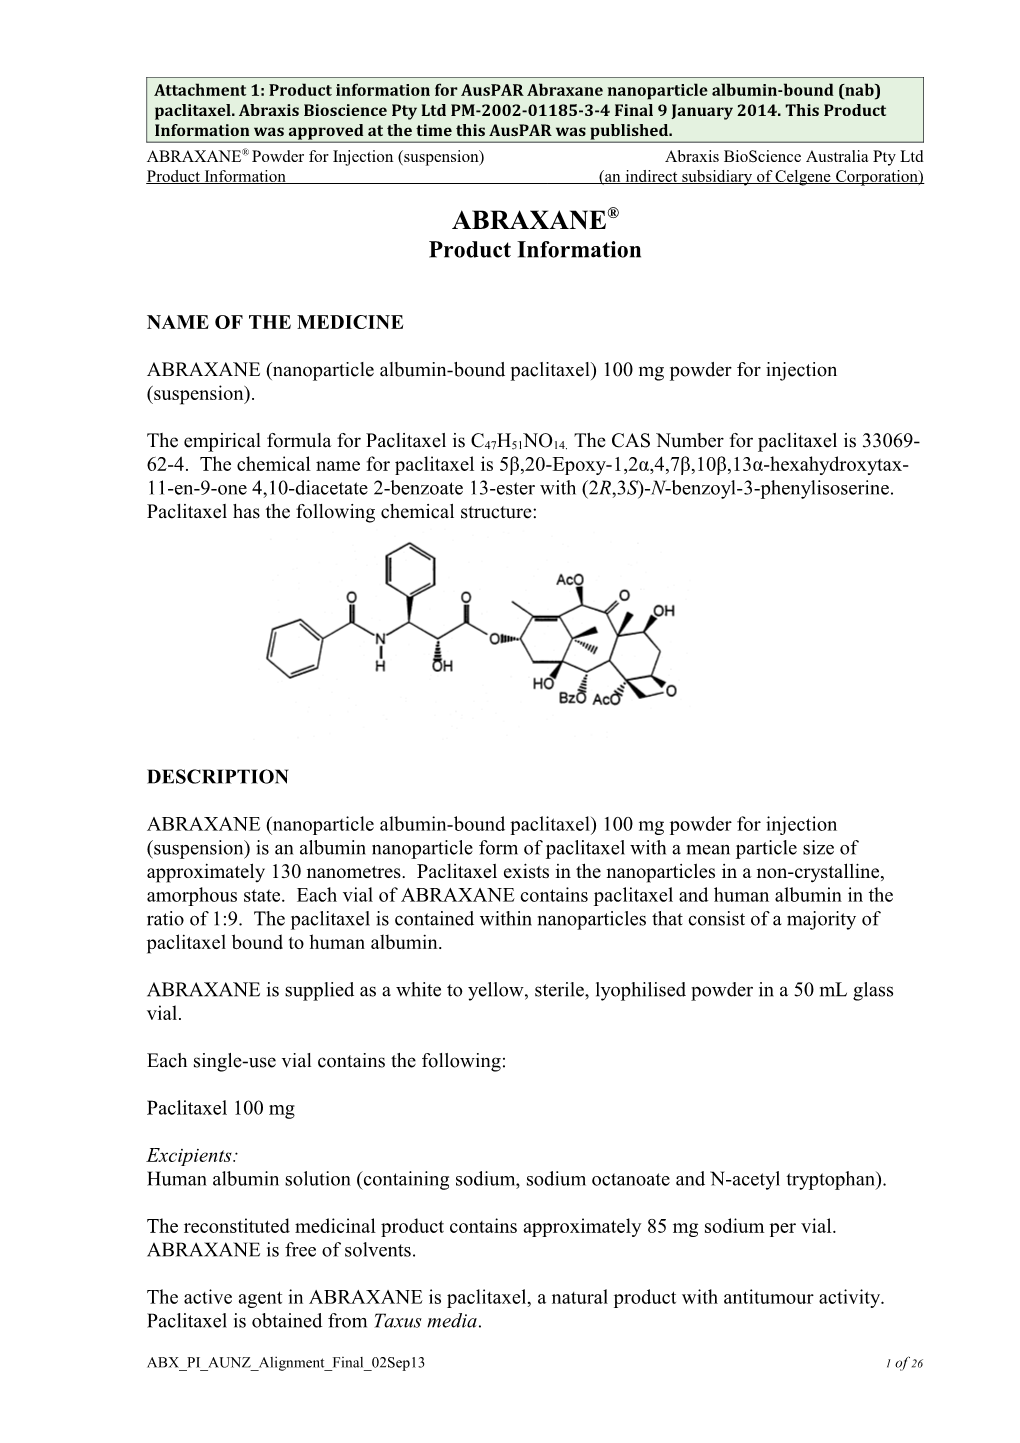 Auspar Attachment 1: Product Information Abraxane (Nanoparticle Albumin-Bound Paclitaxel)